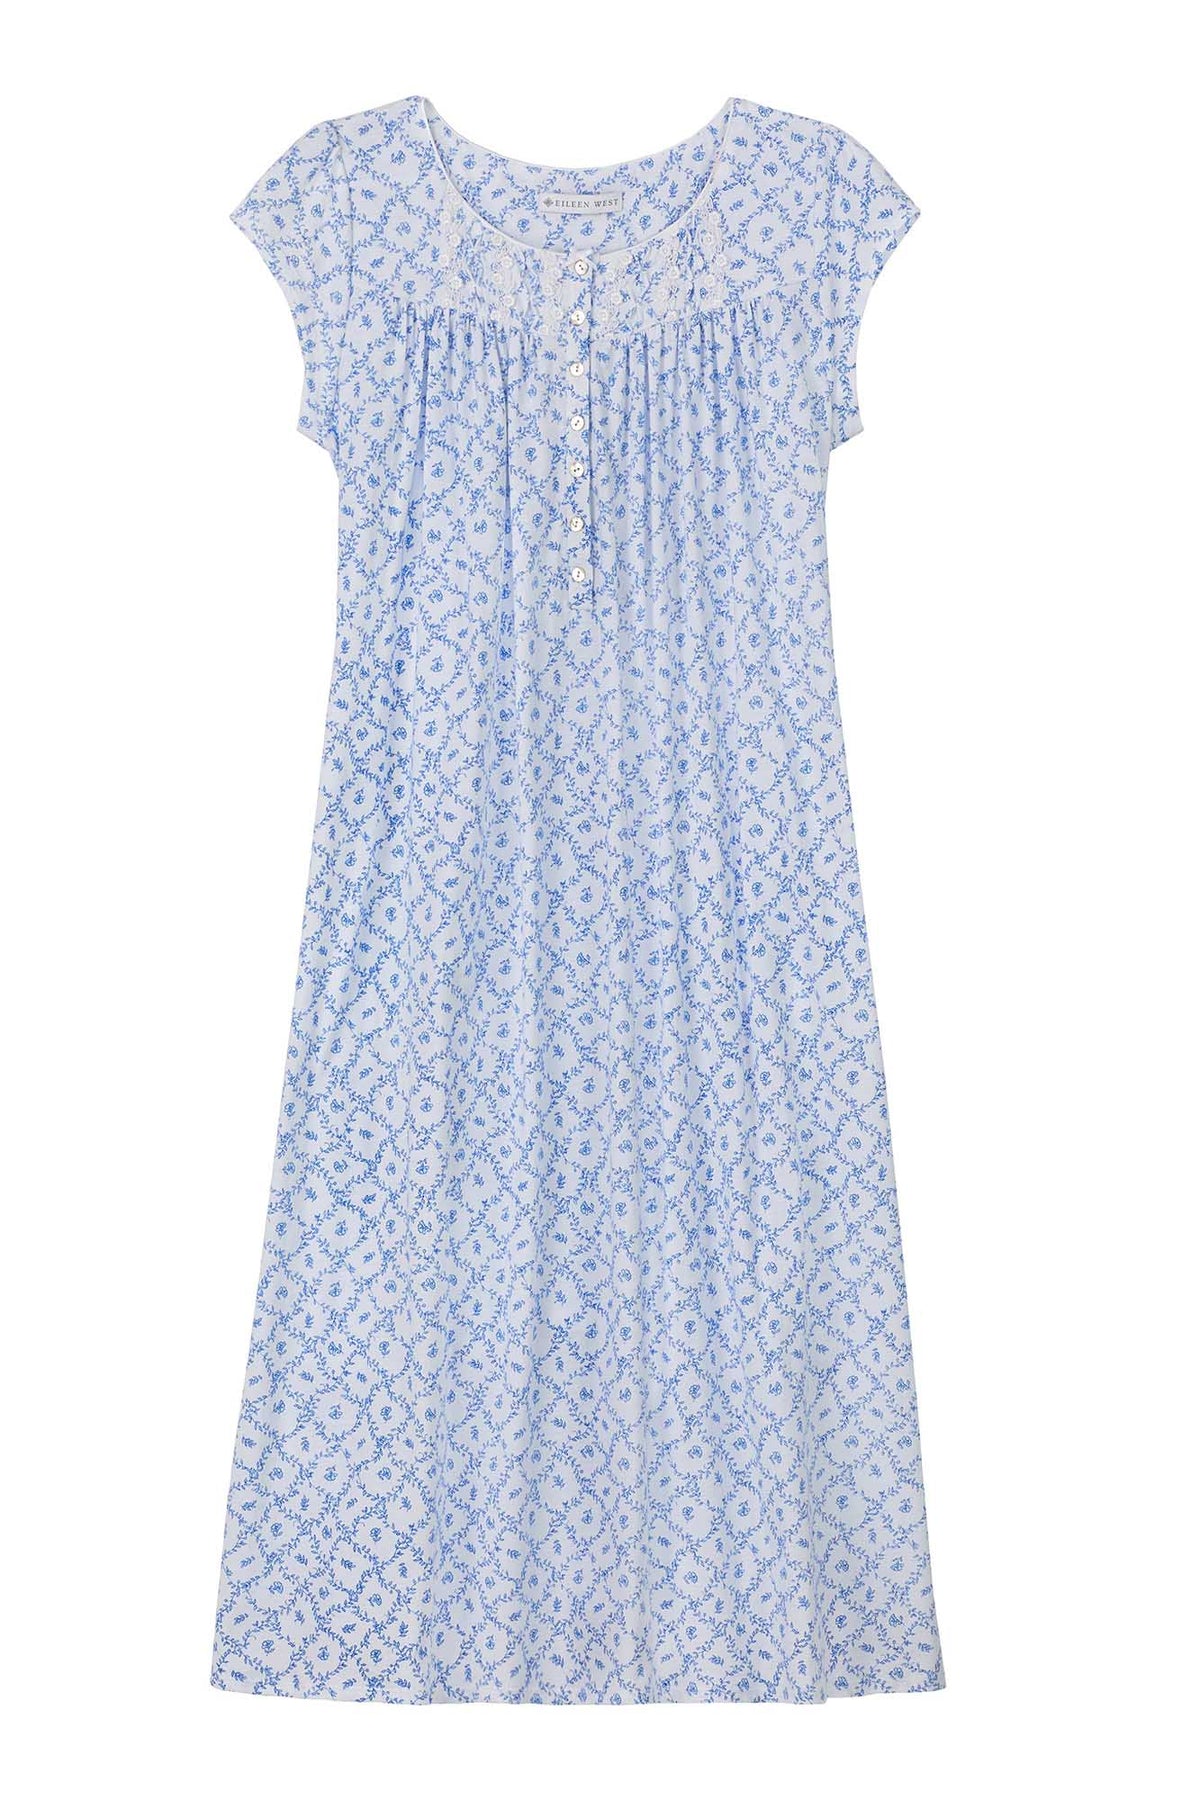 Rose Diamond Long Knit Cotton Nightgown